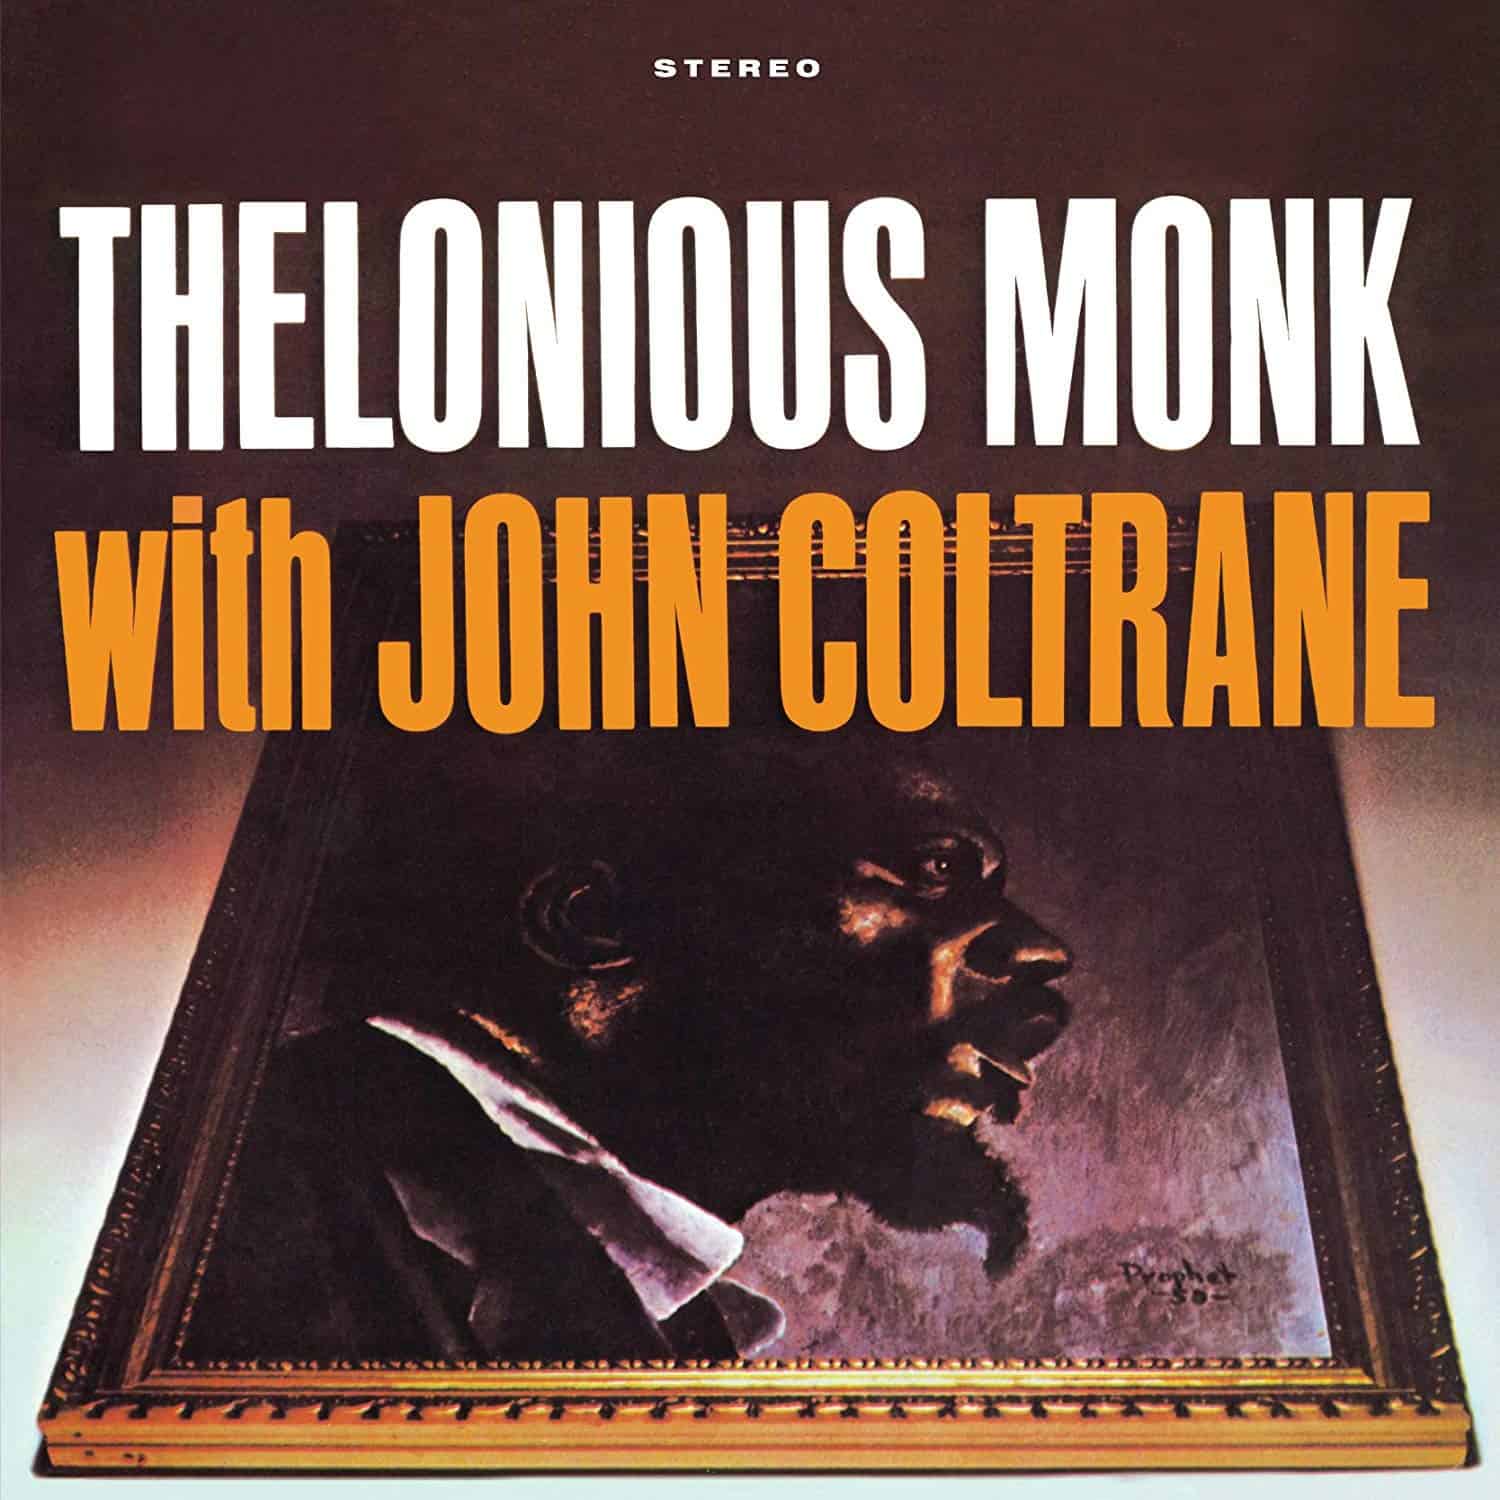 Thelonious-Monk-With-John-Coltrane-vinyl-LP-record-album-front